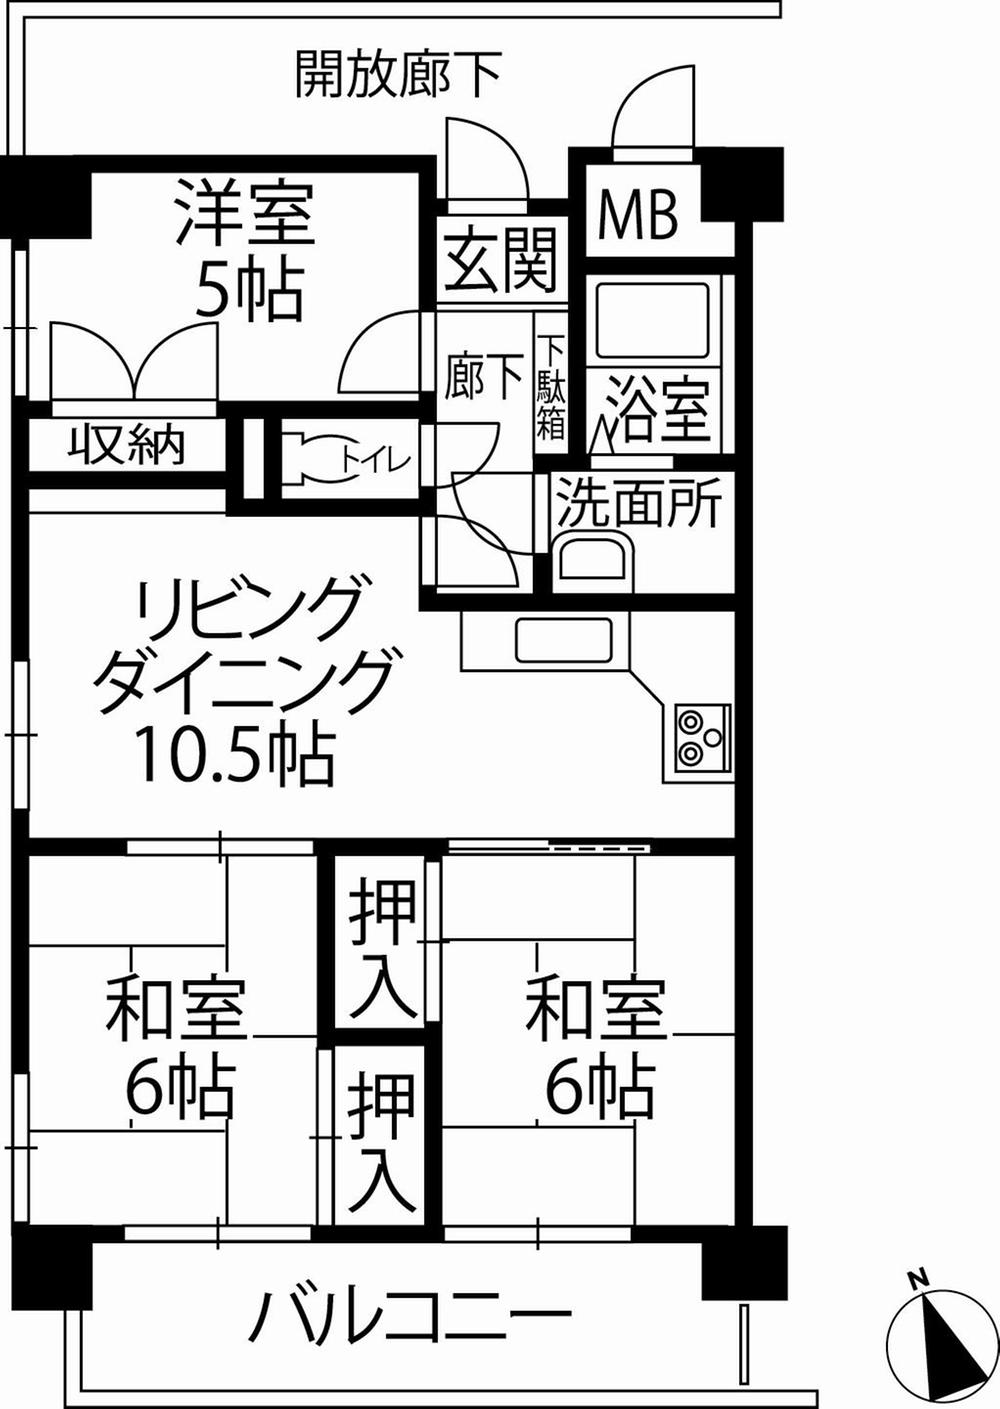 Floor plan. 3LDK, Price 13.8 million yen, Occupied area 62.35 sq m , Balcony area 10.08 sq m